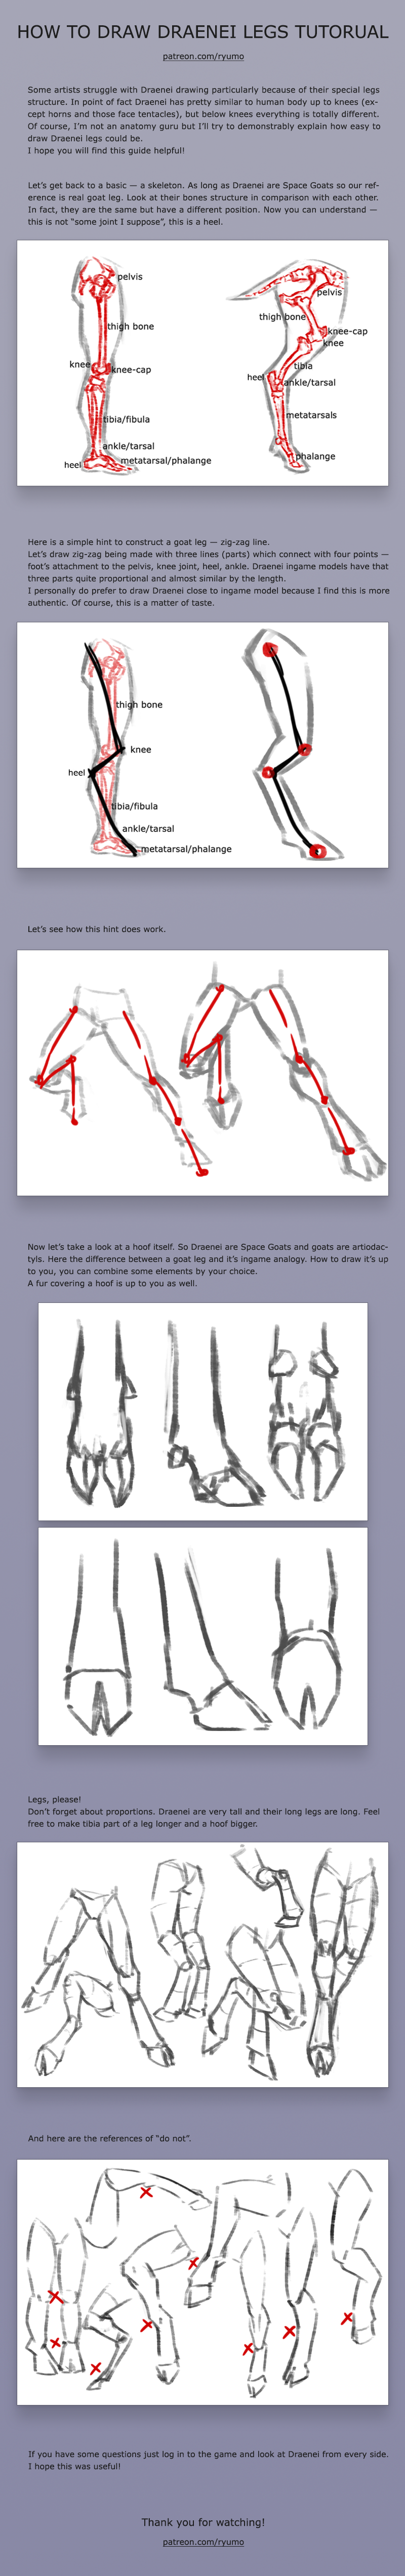 dc7oc2z-ba335973-858c-4eb6-a85b-06caf52a68a3 How to draw legs, realistically drawn male and female legs